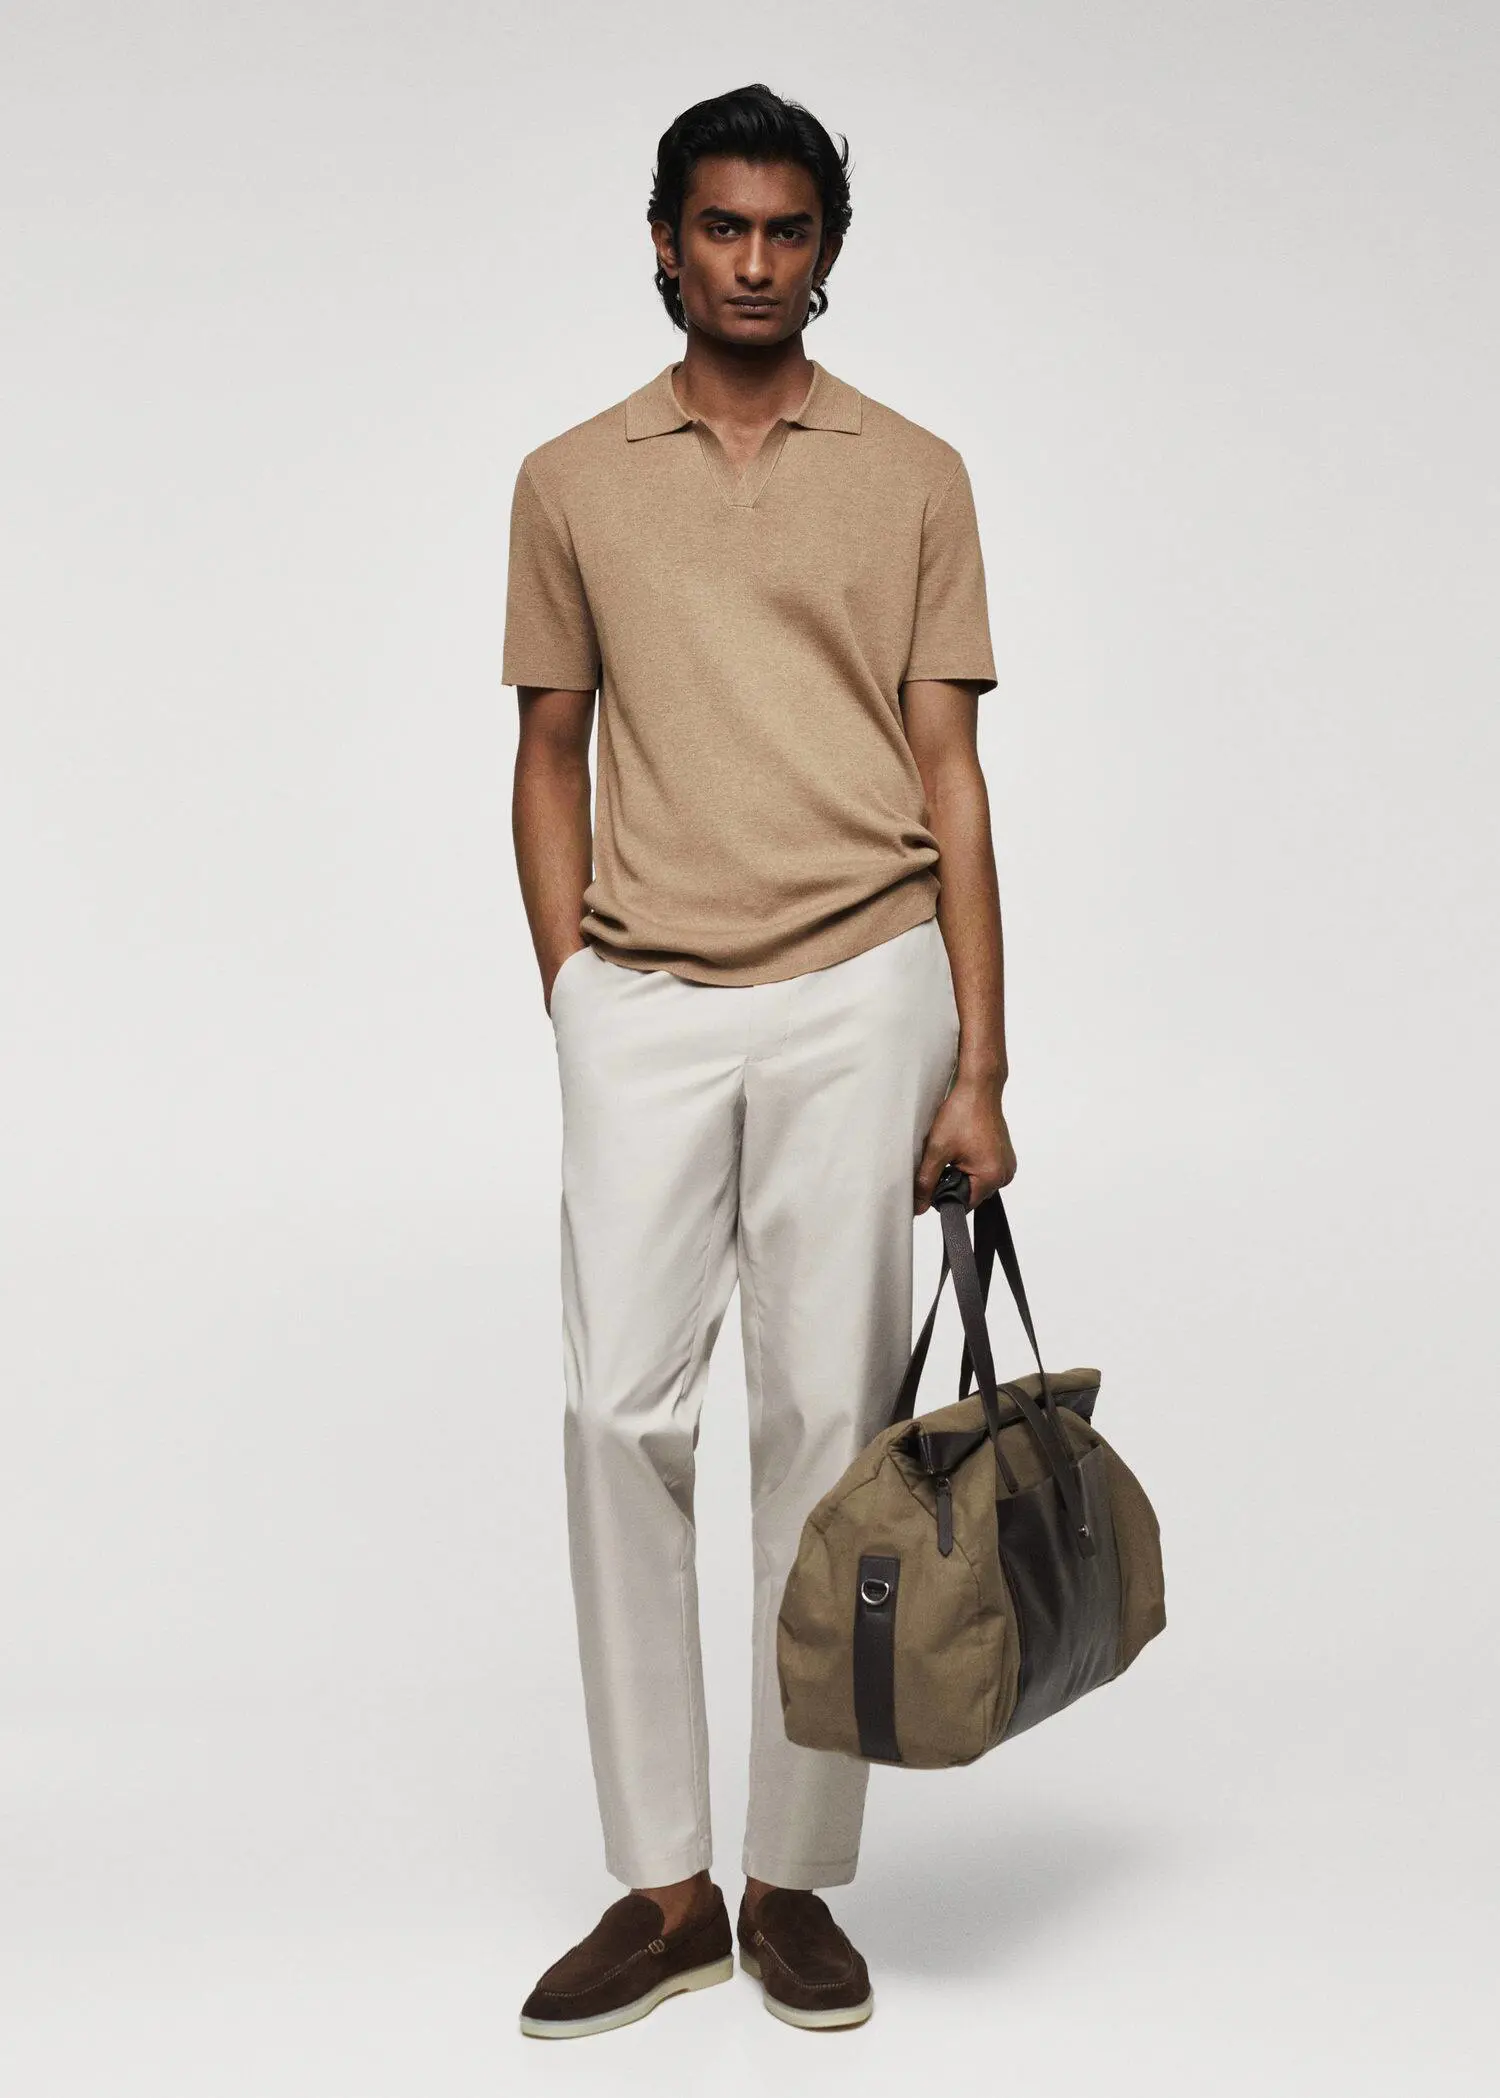 Mango Fine-knit polo shirt. a man in a tan polo shirt holding a bag. 